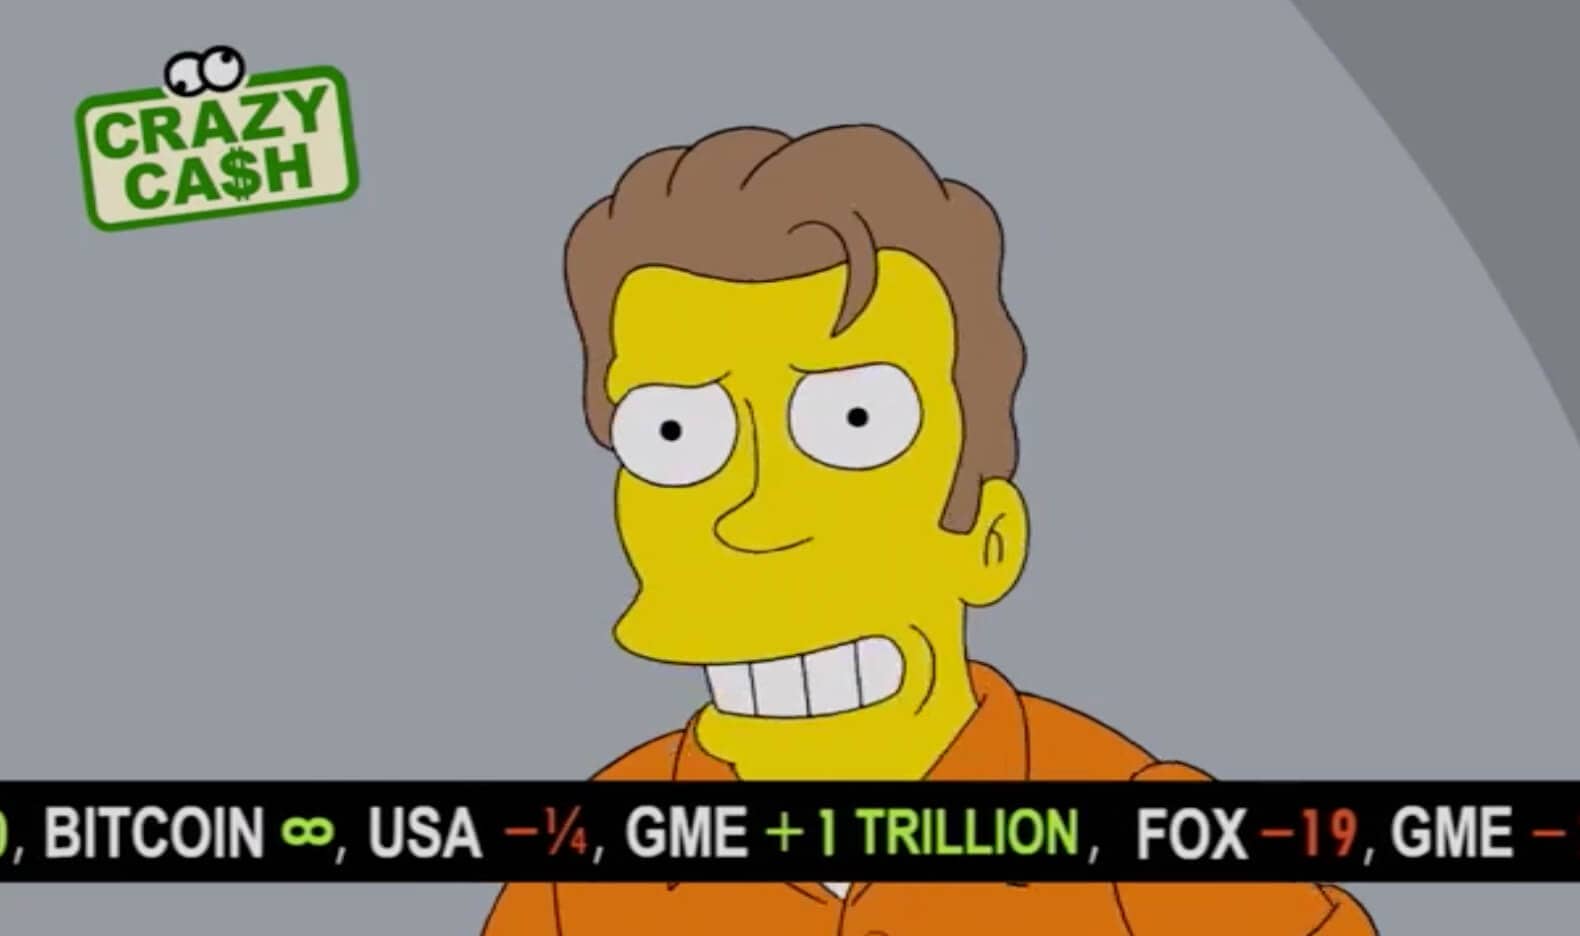 Episode des Simpson où Bitcoin vaut une somme infinie de dollars.